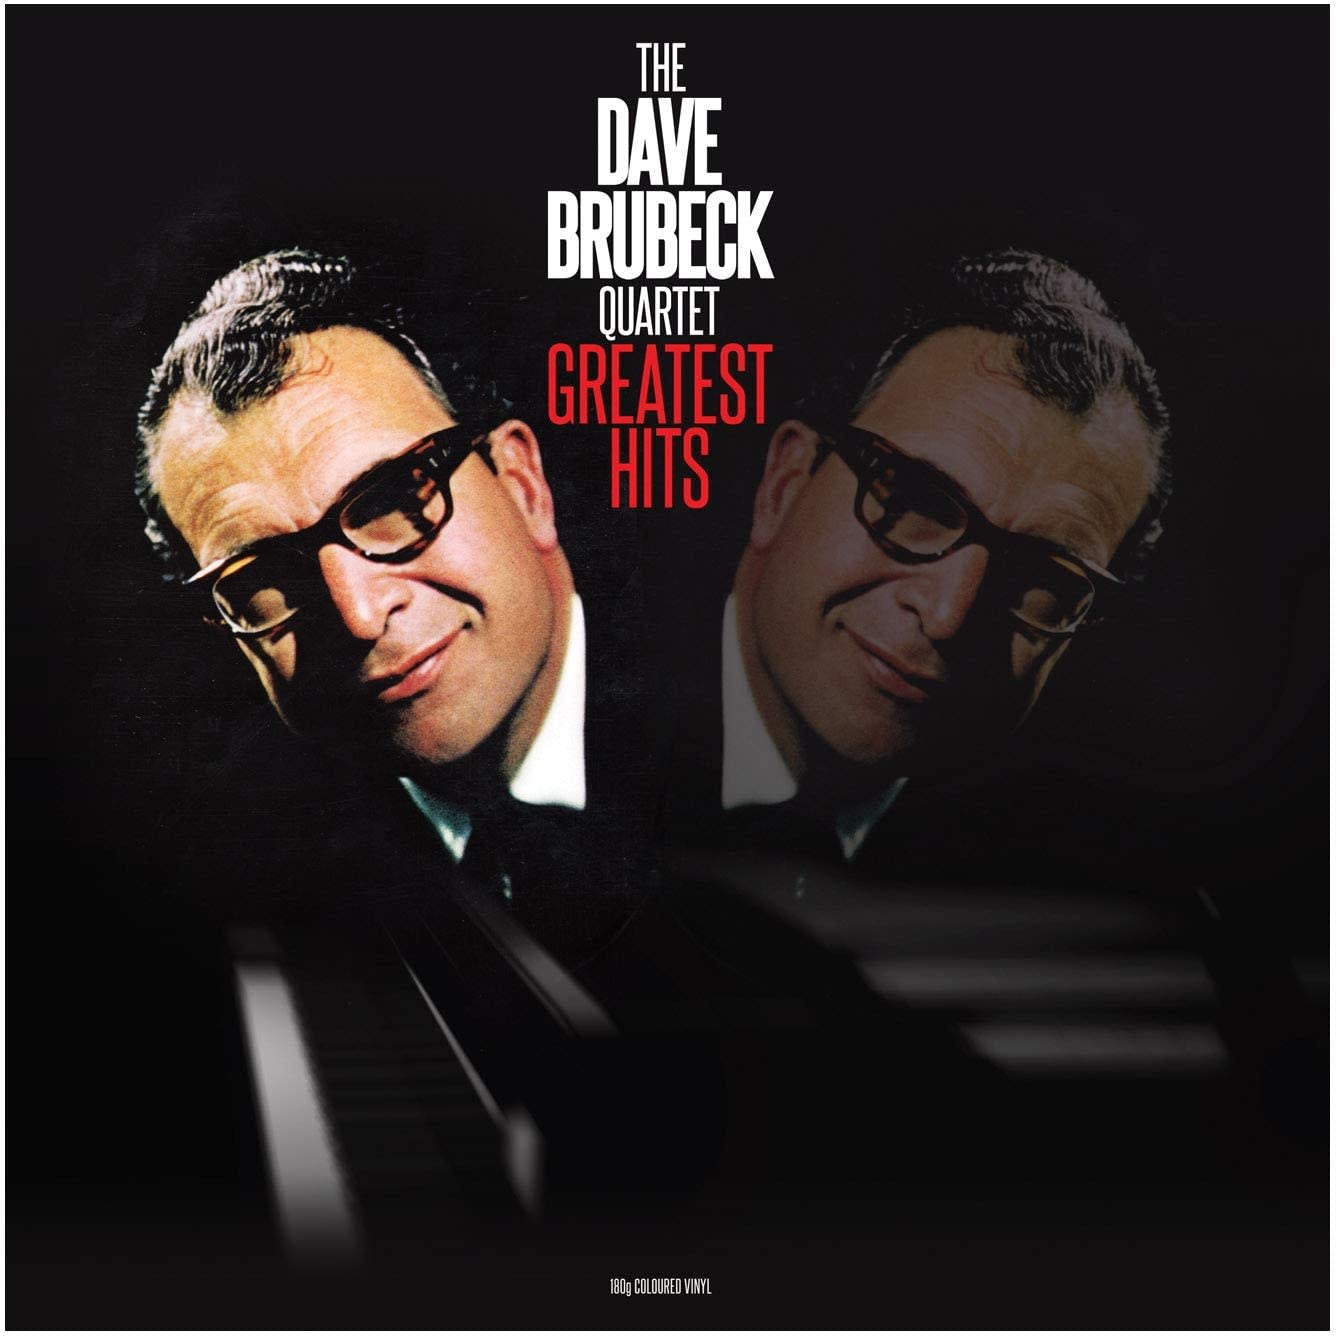 Dave Brubeck Quartet- Greatest Hits (Vinyl LP)